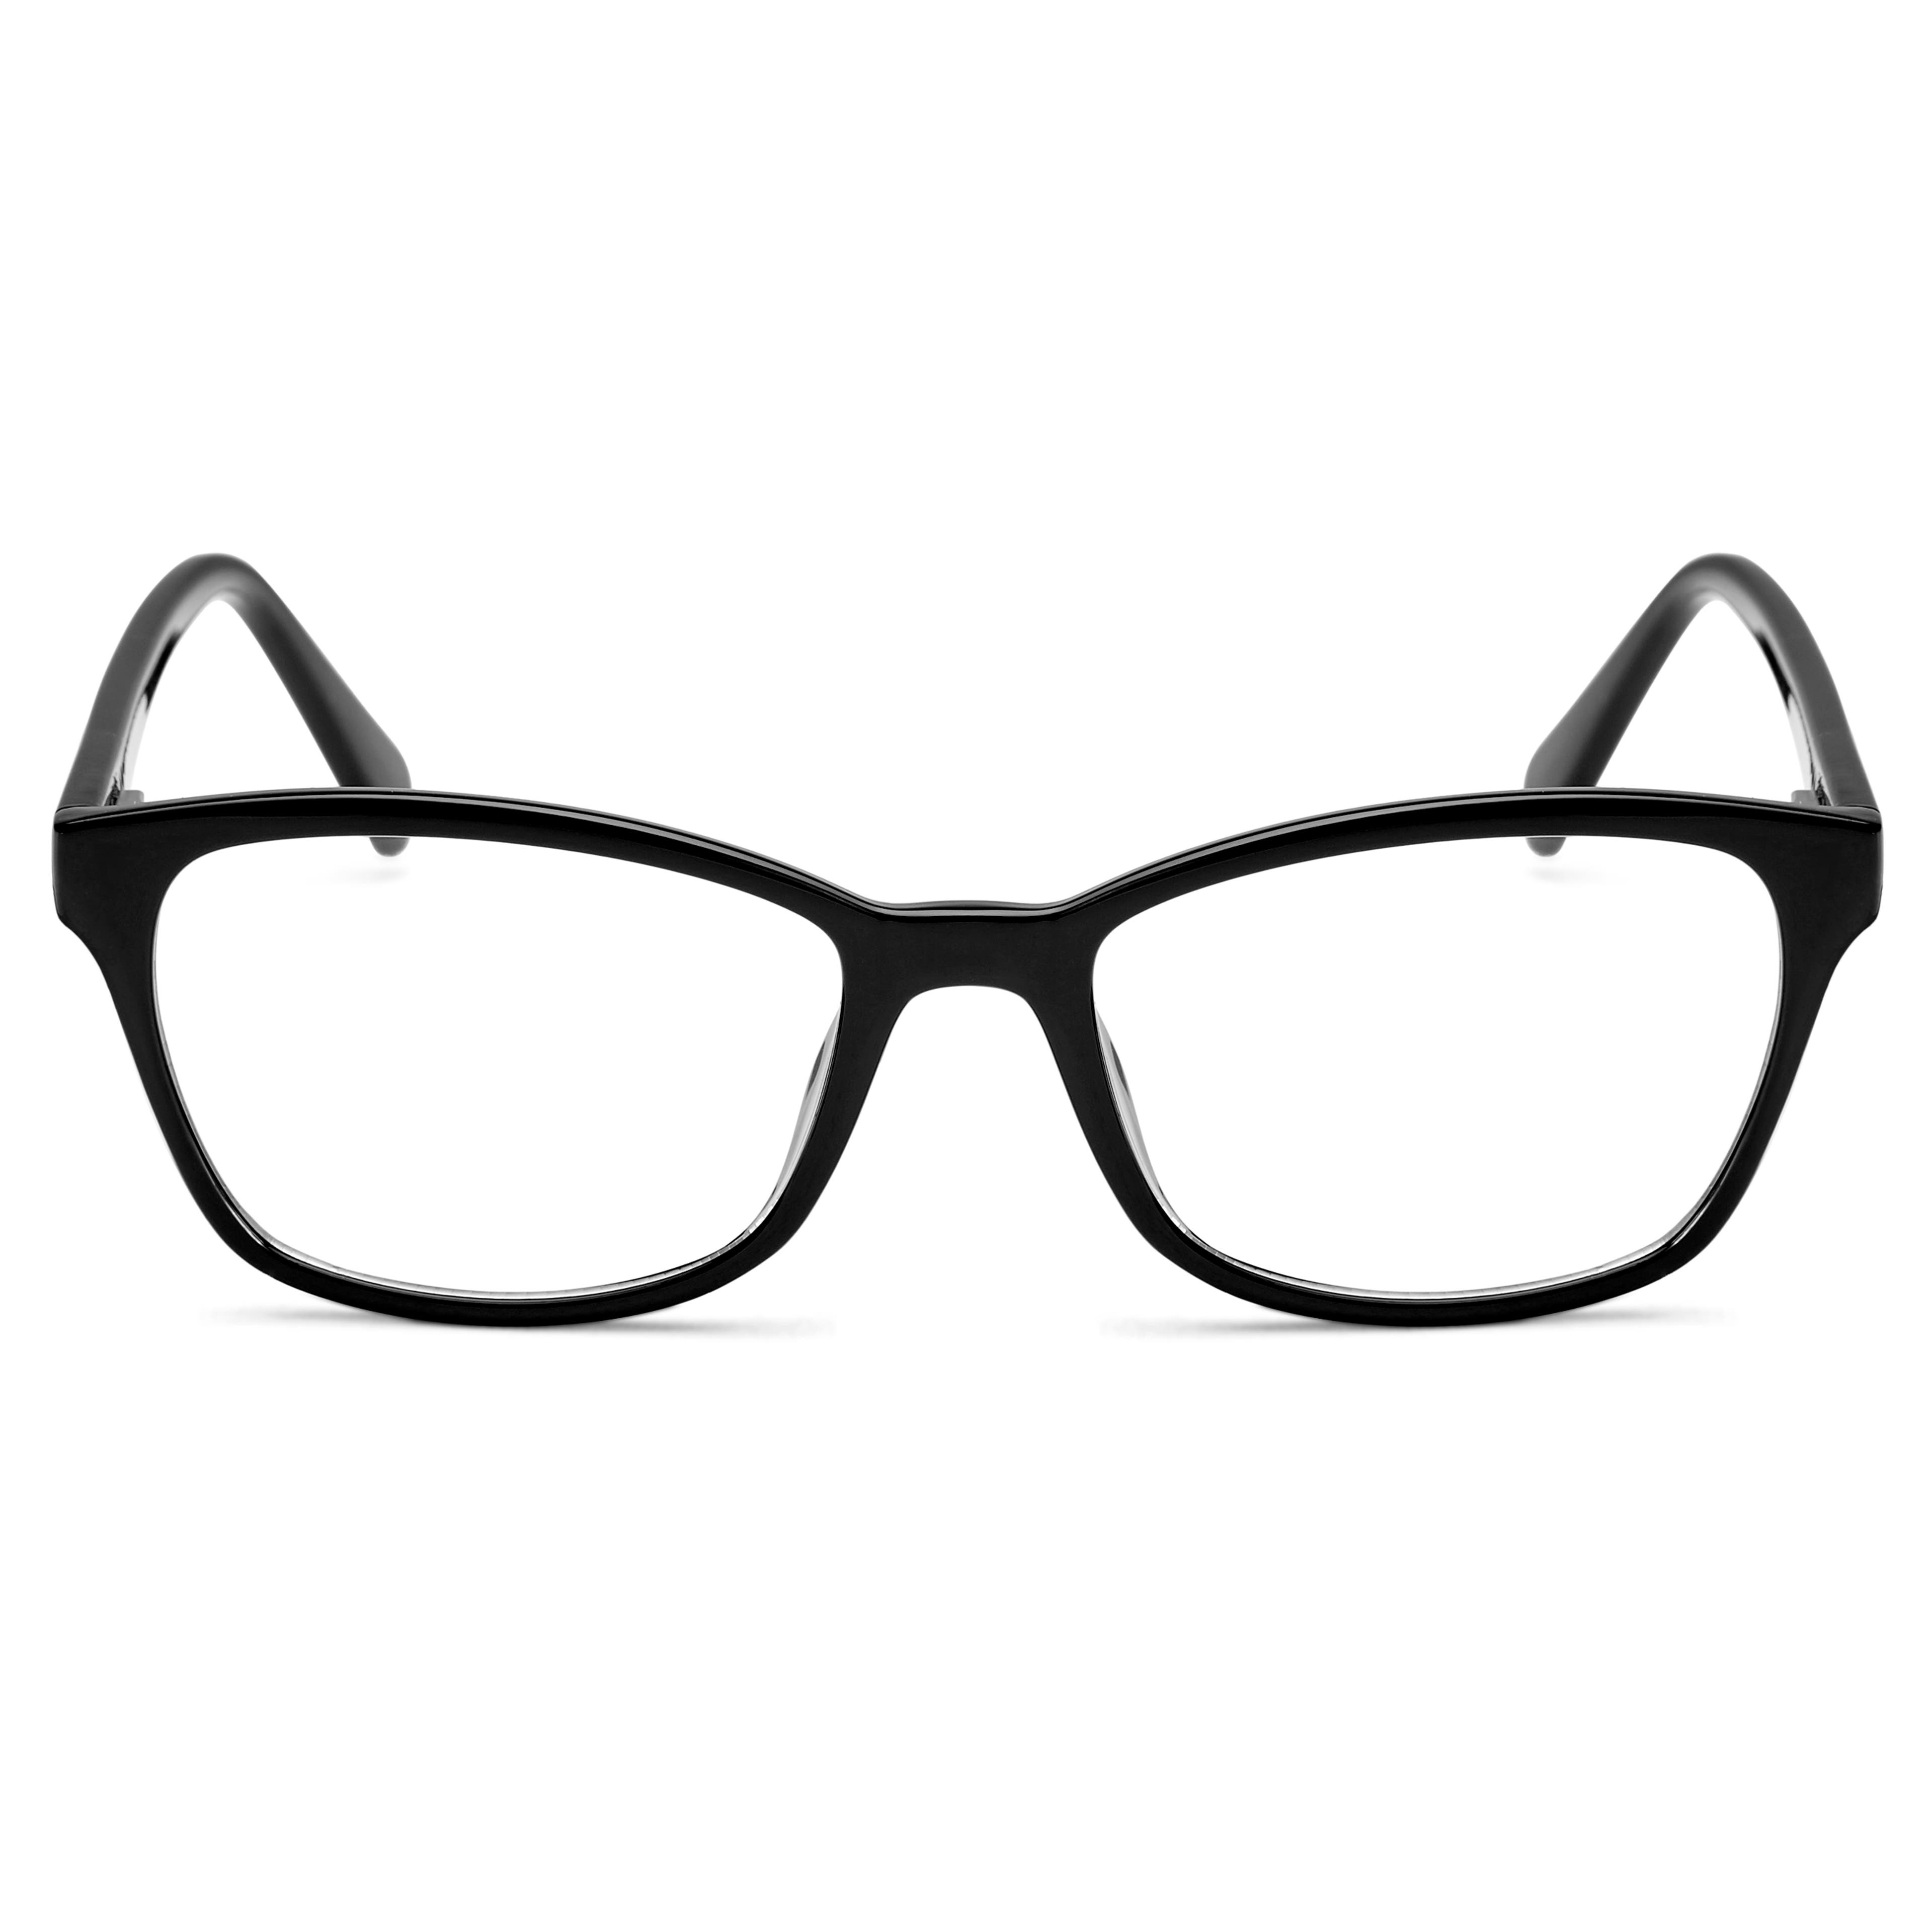 Faculty Black Glasses 